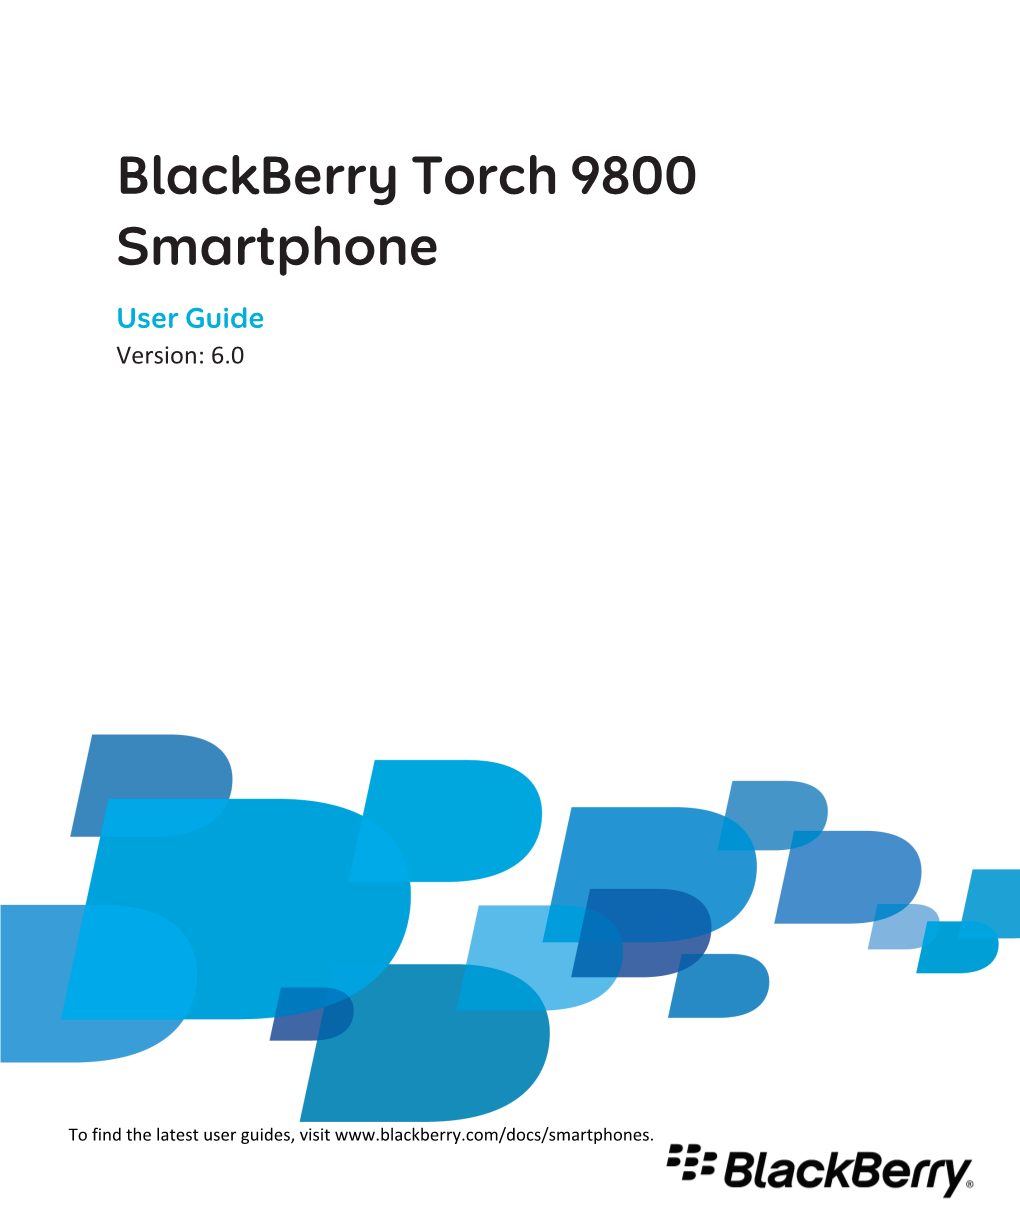 Blackberry Torch 9800 Smartphone User Guide Version: 6.0